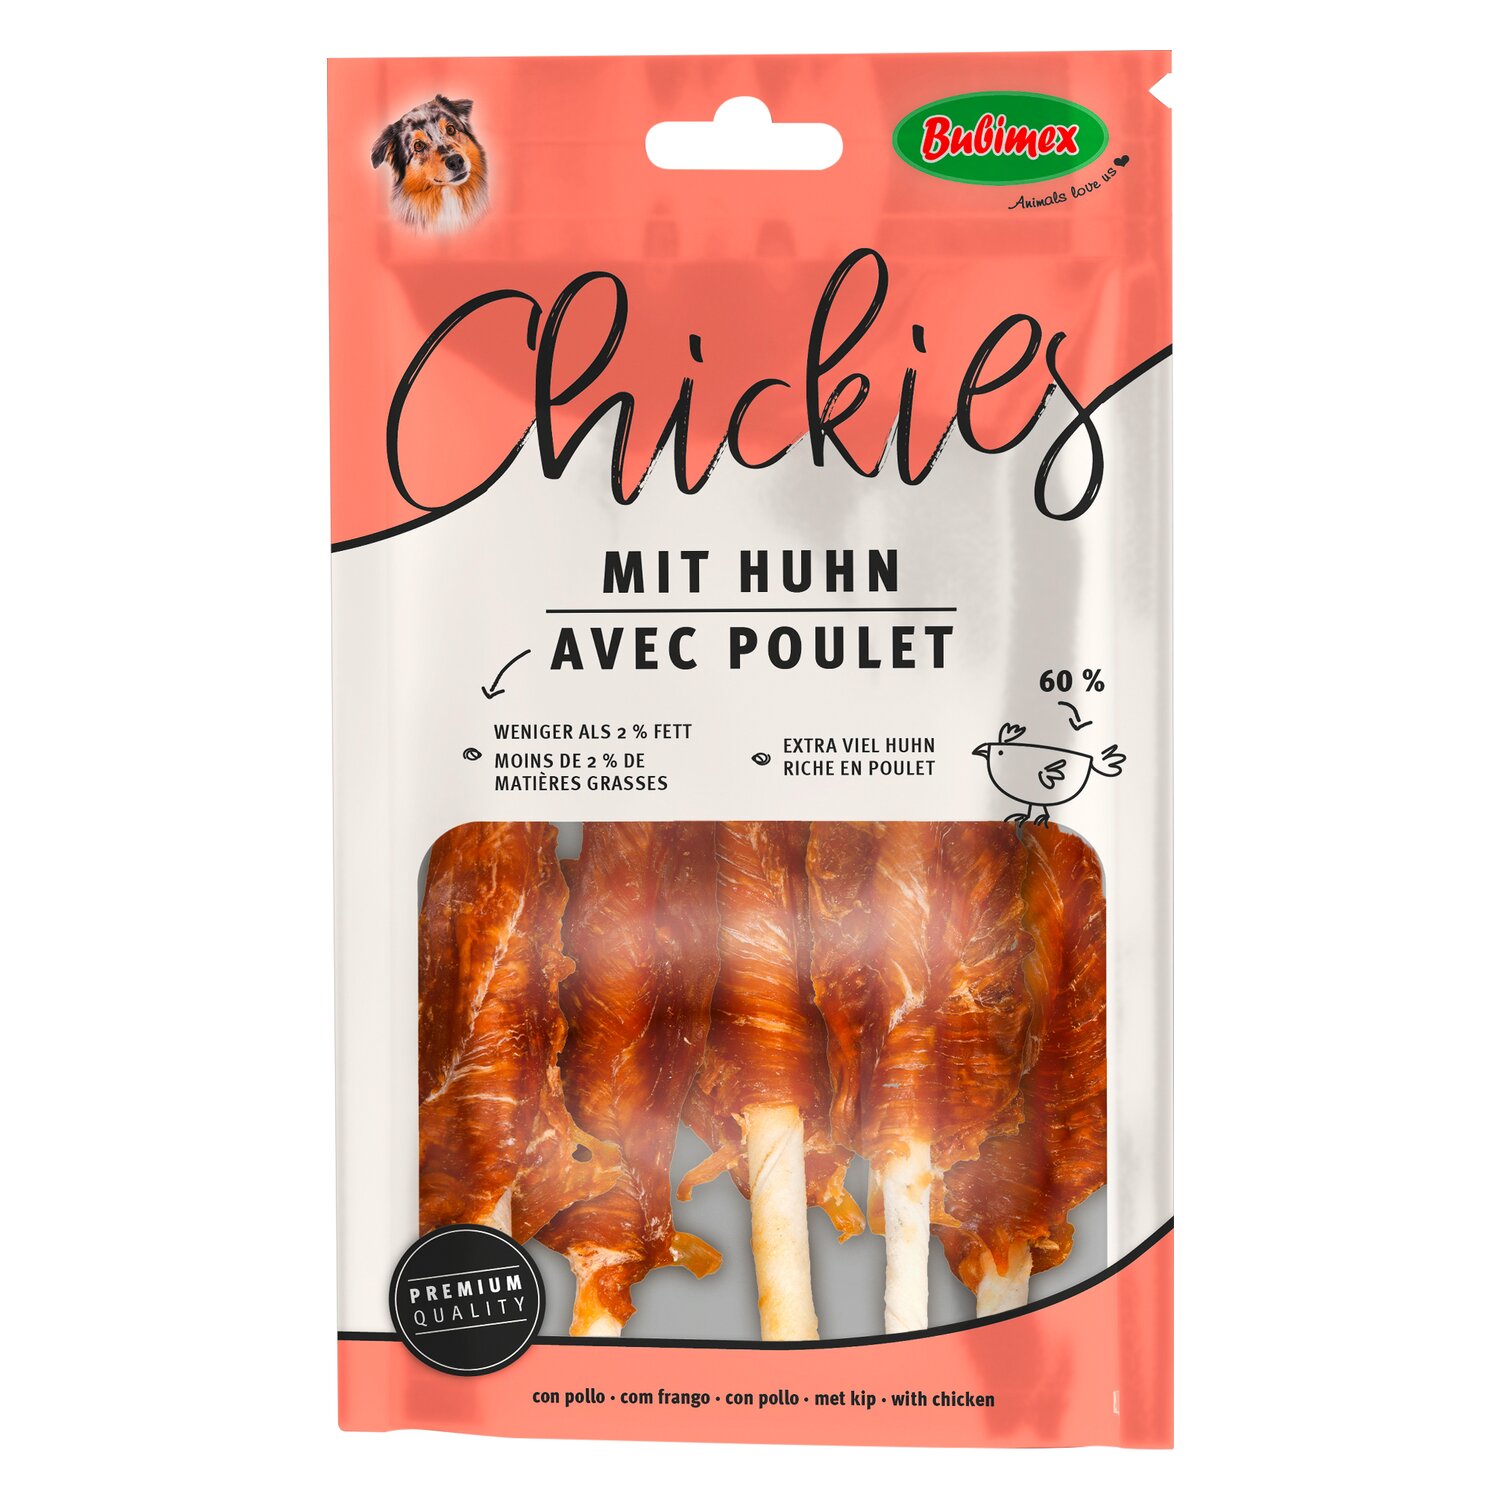 Bubimex Chickies Sticks 95 g